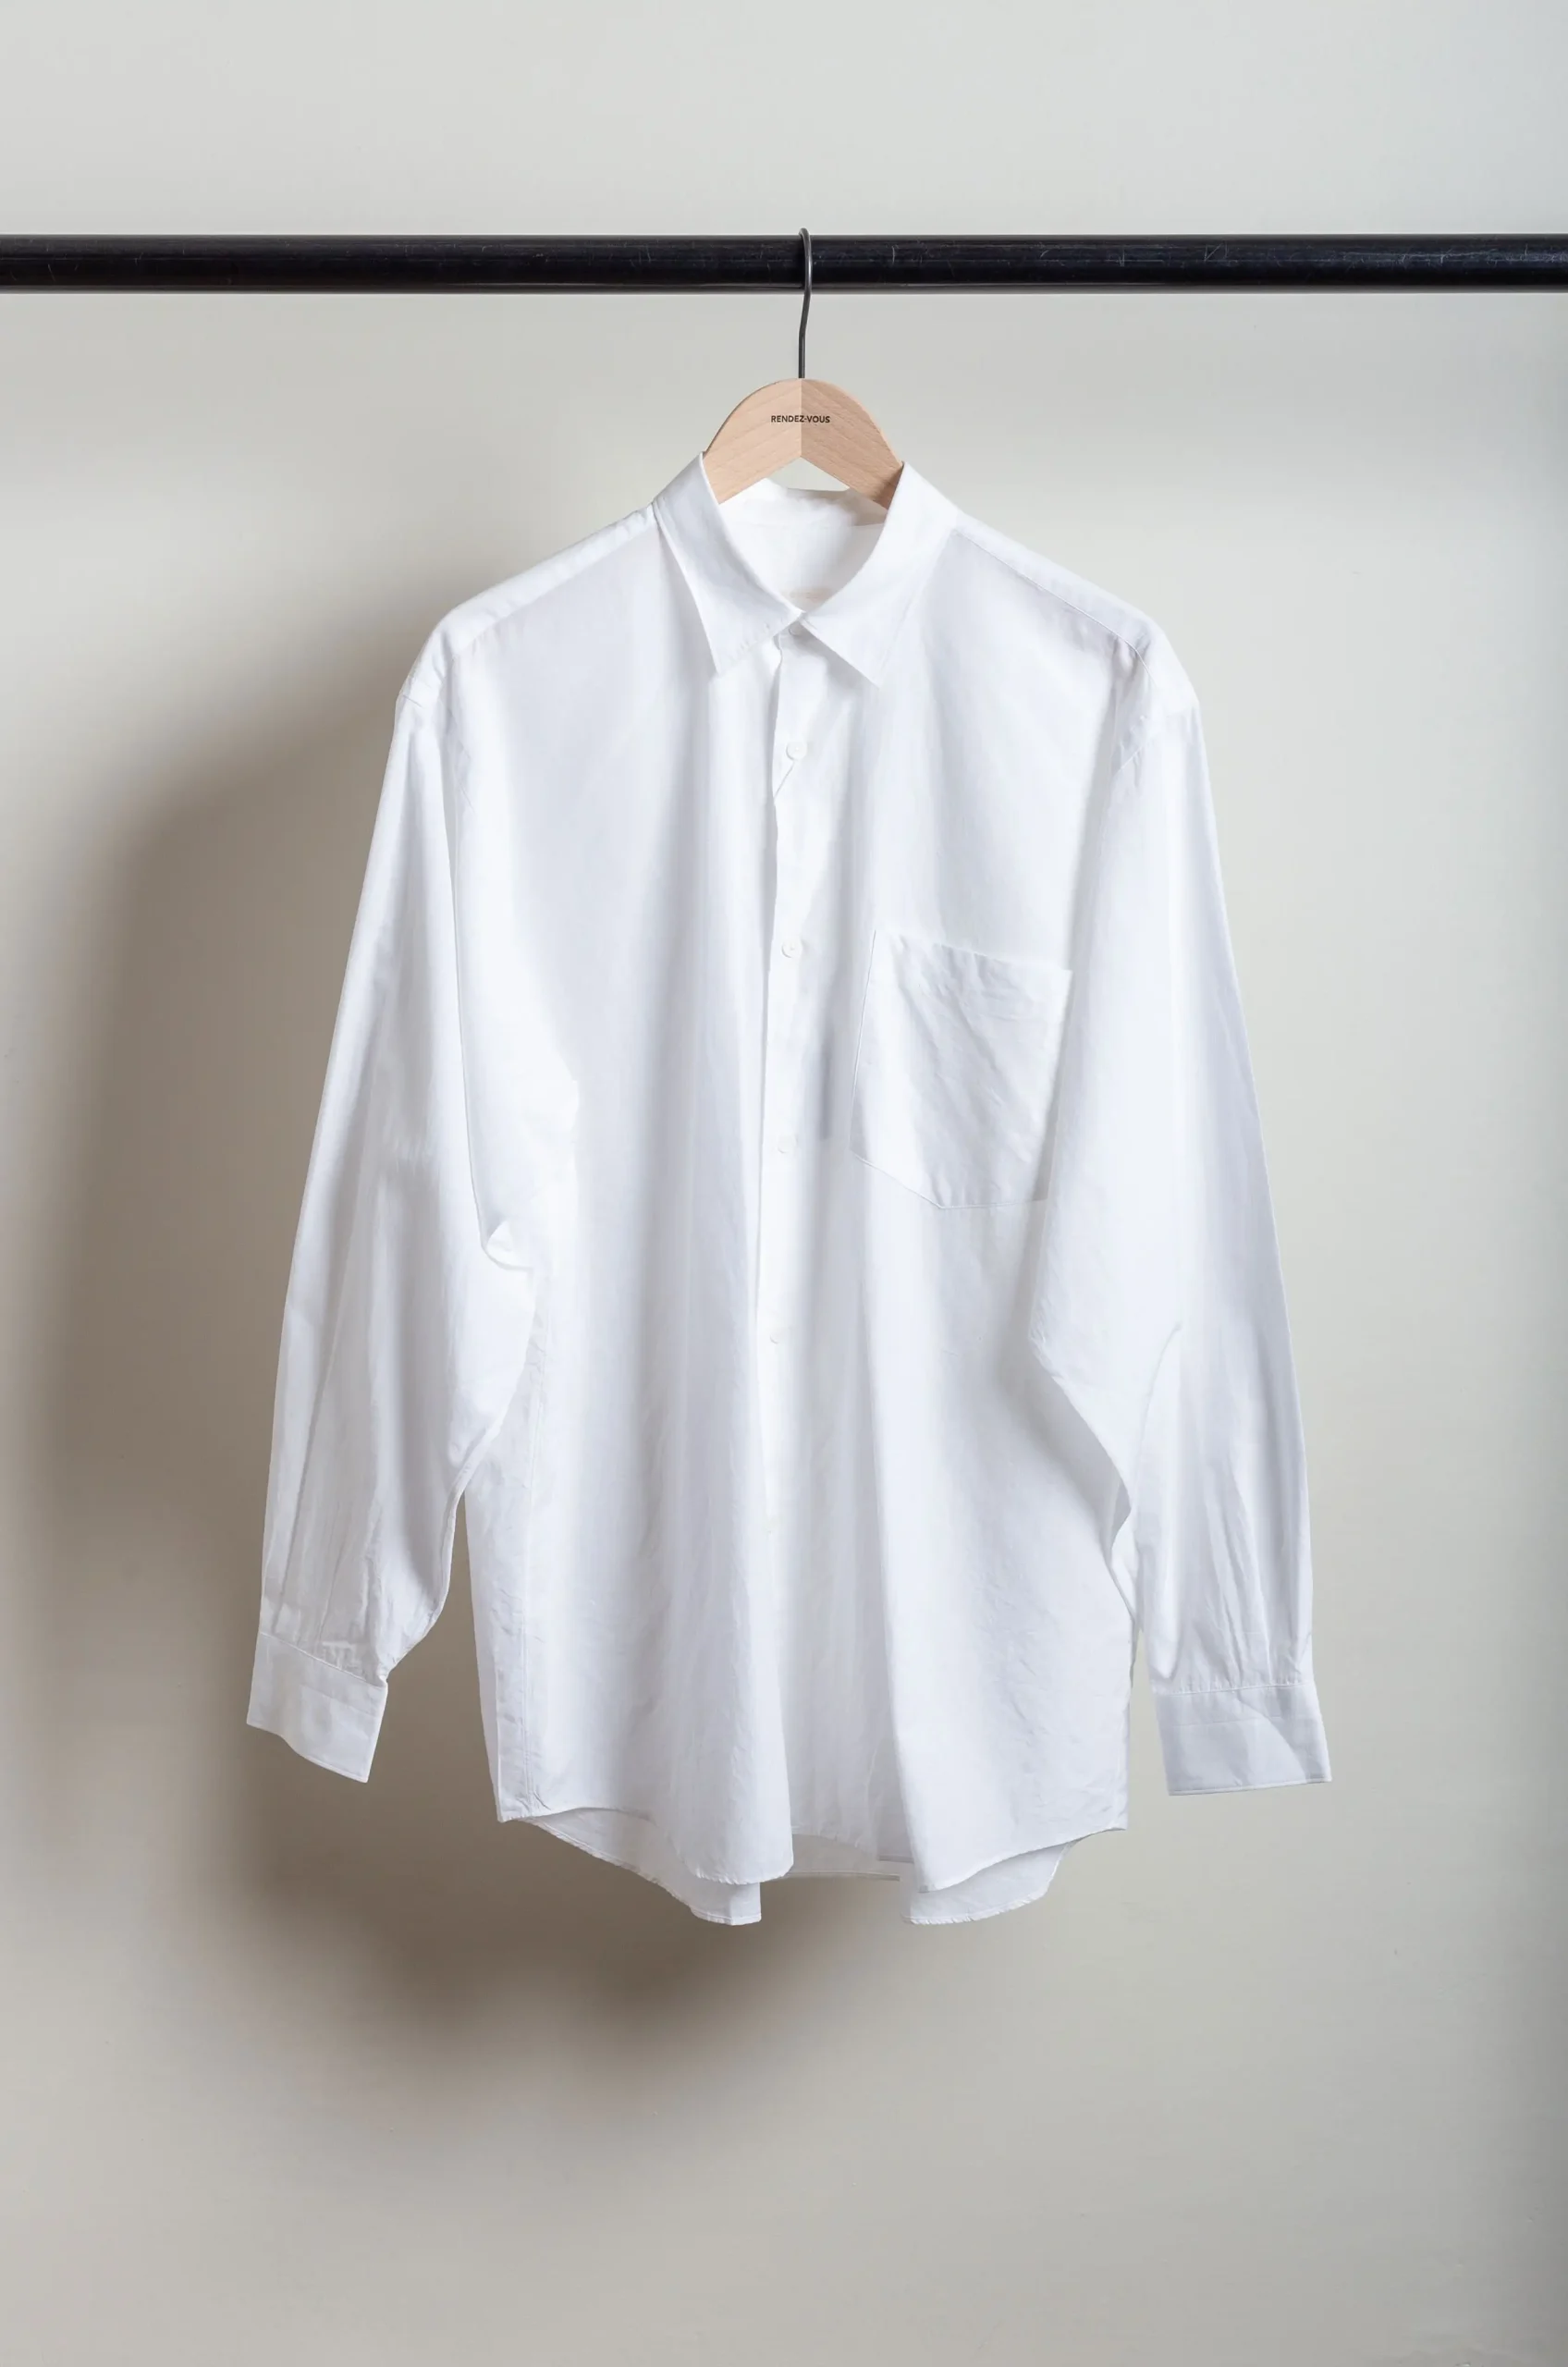 Comoli - Shirt Z01-02001 White - Rendez-vous Store